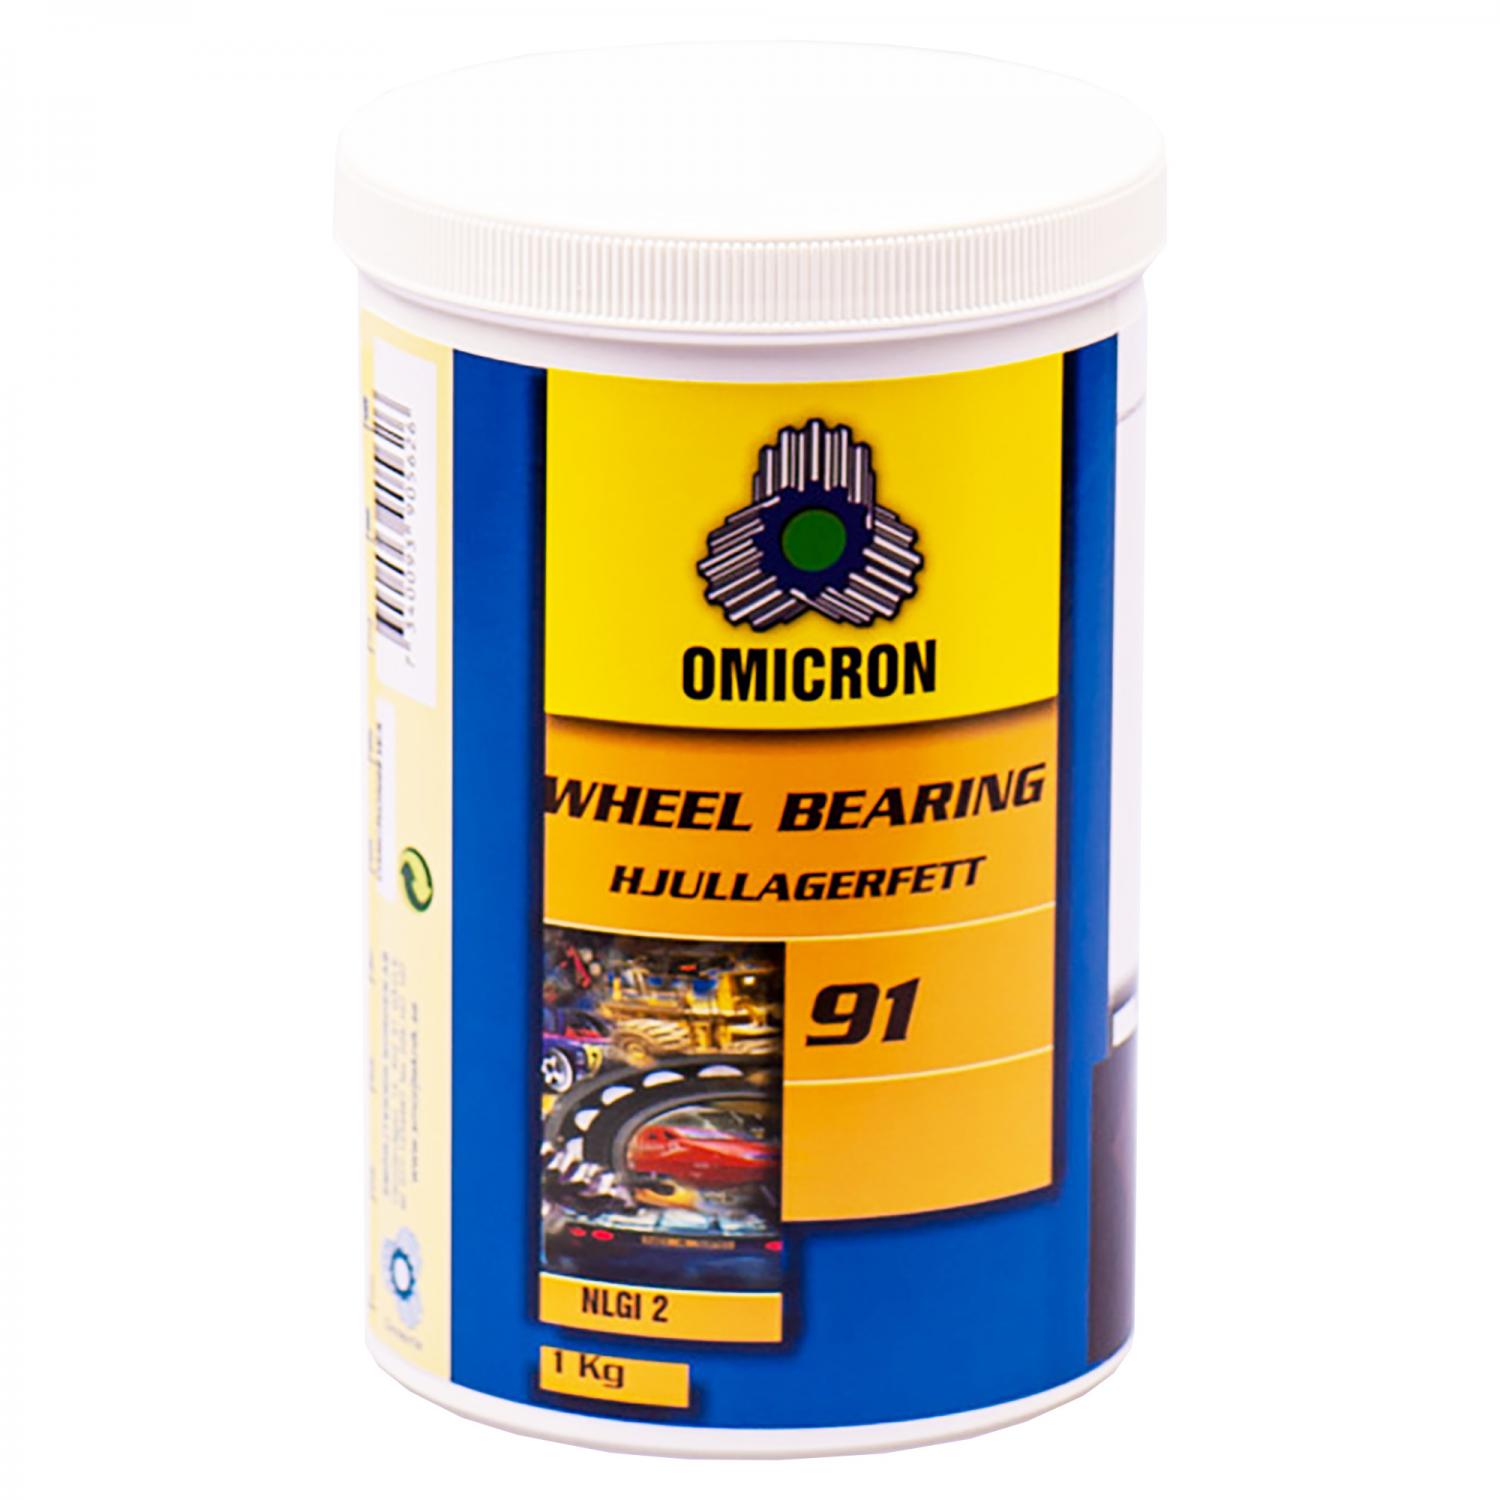 Omicron 91 Hjullagerfett NLGI2 / 1kg